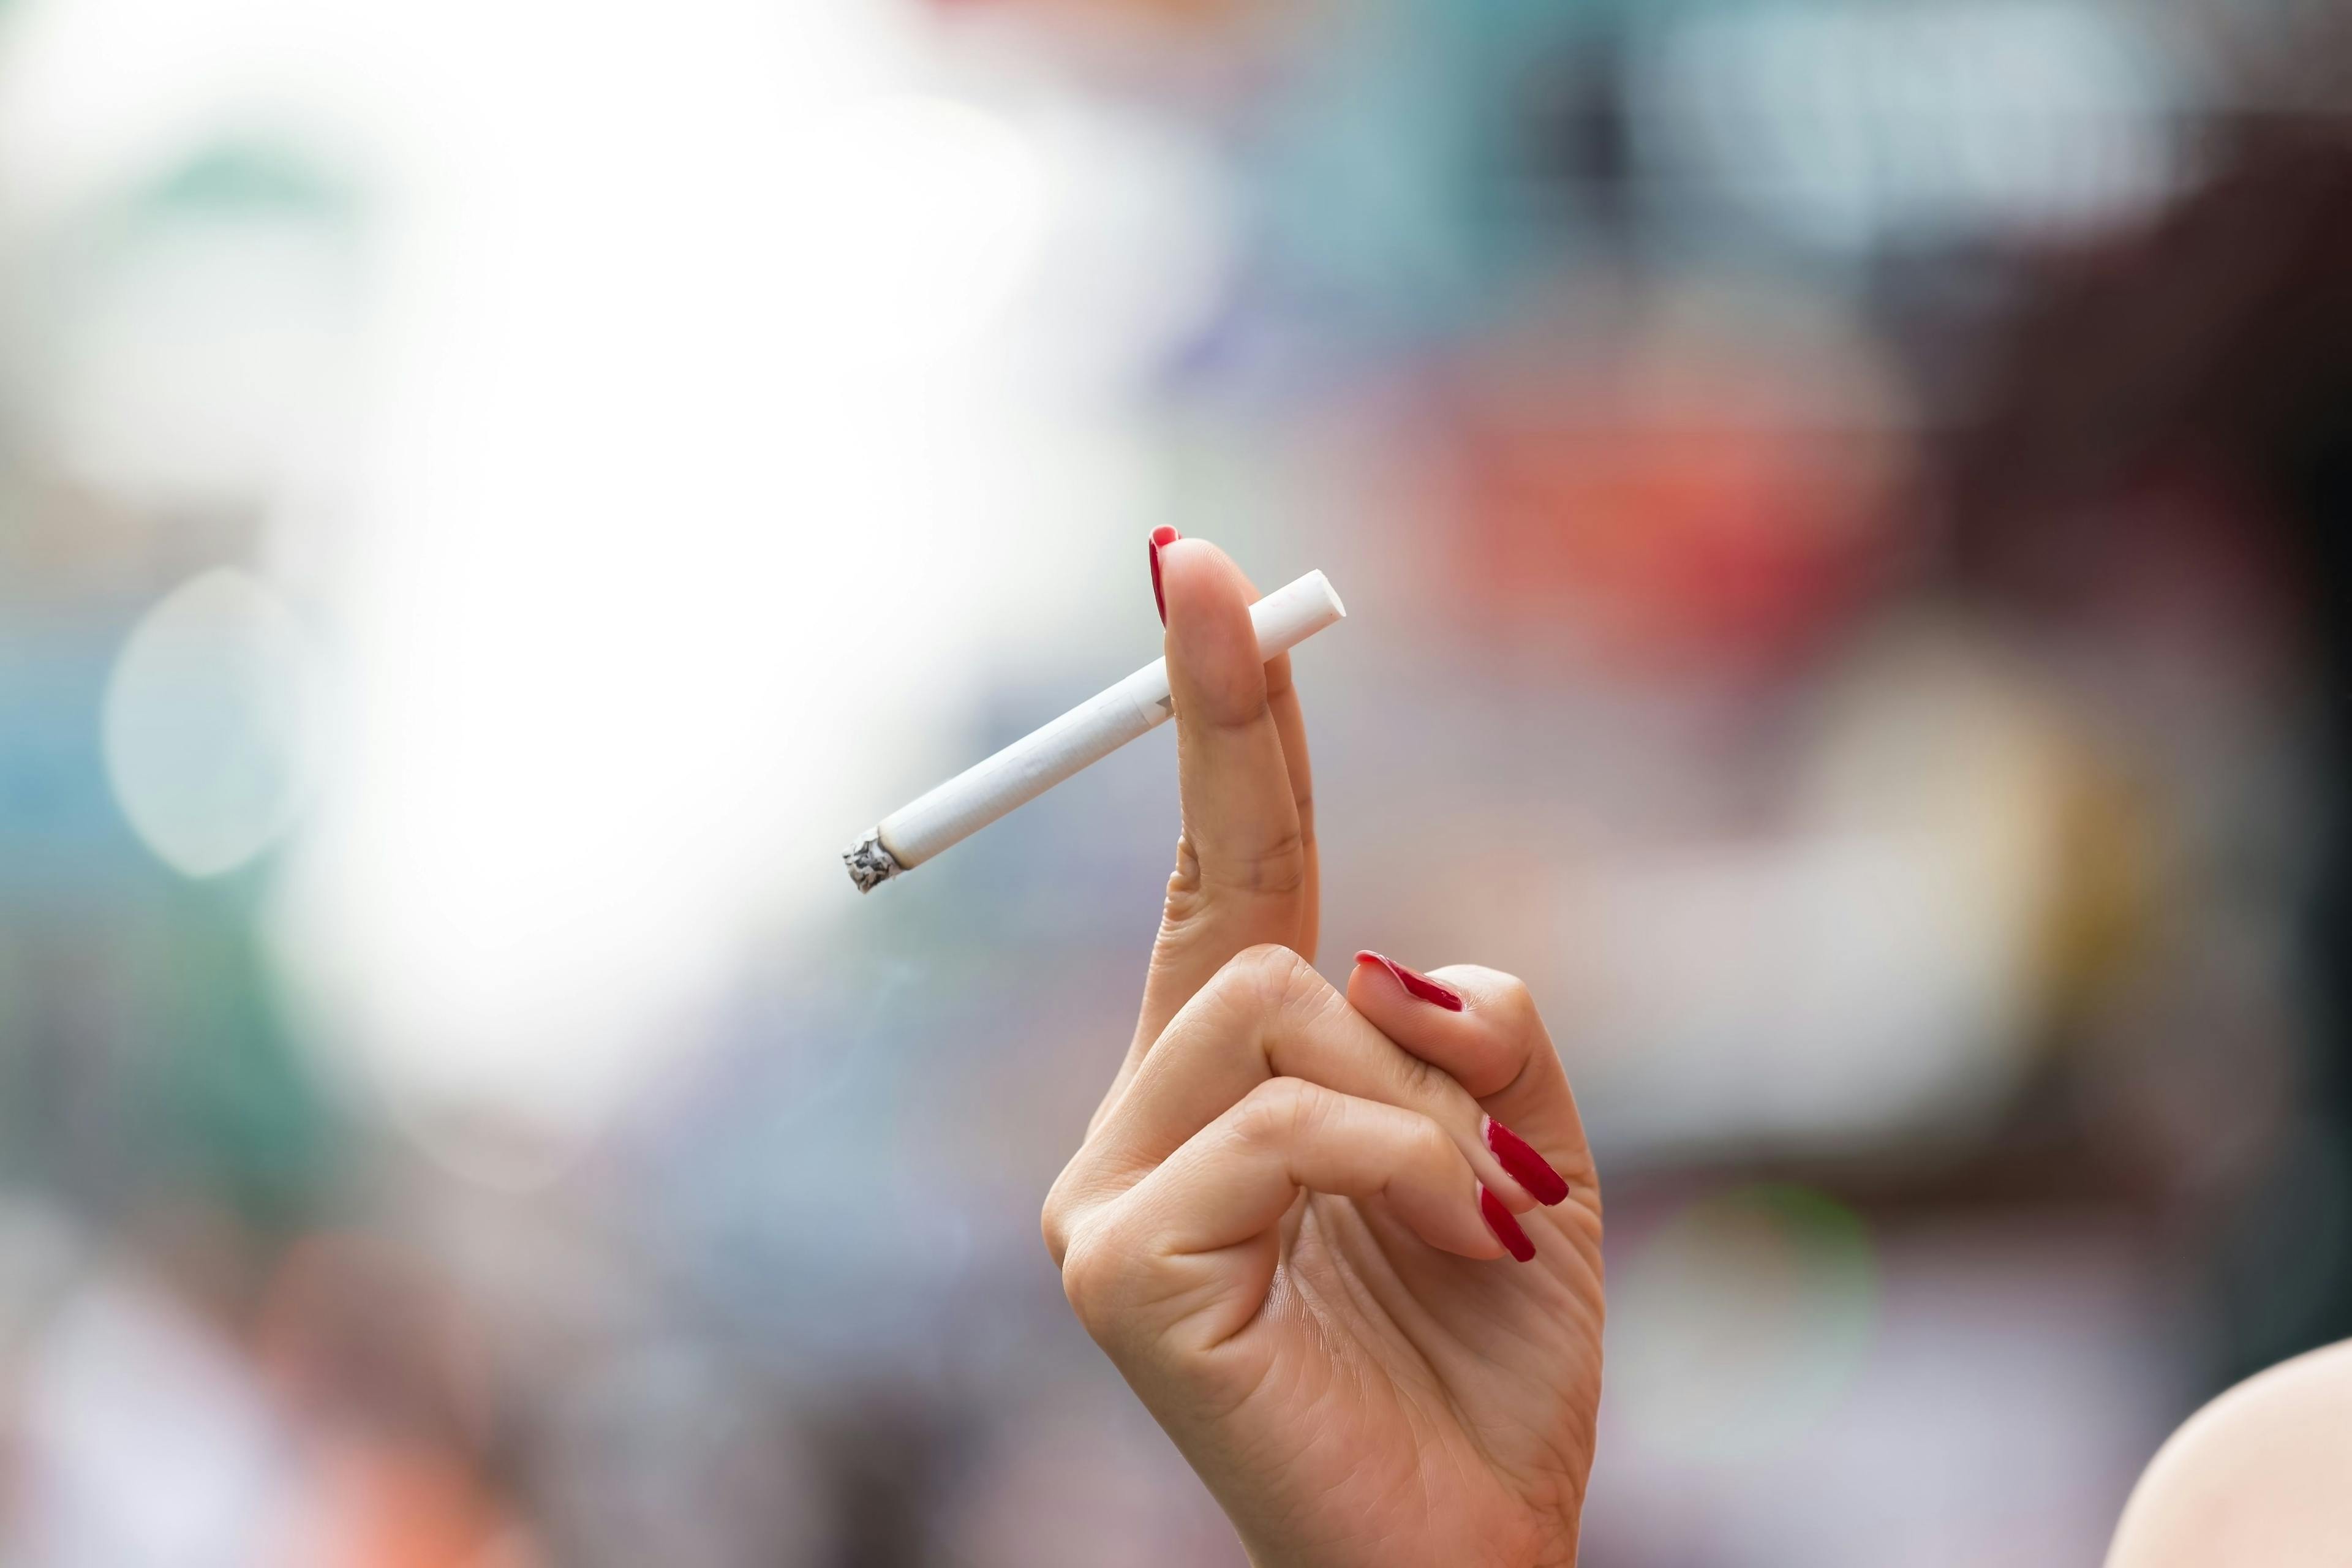 ESC 2021: Despite Smoking Less, Women Find it Harder to Quit Than Men